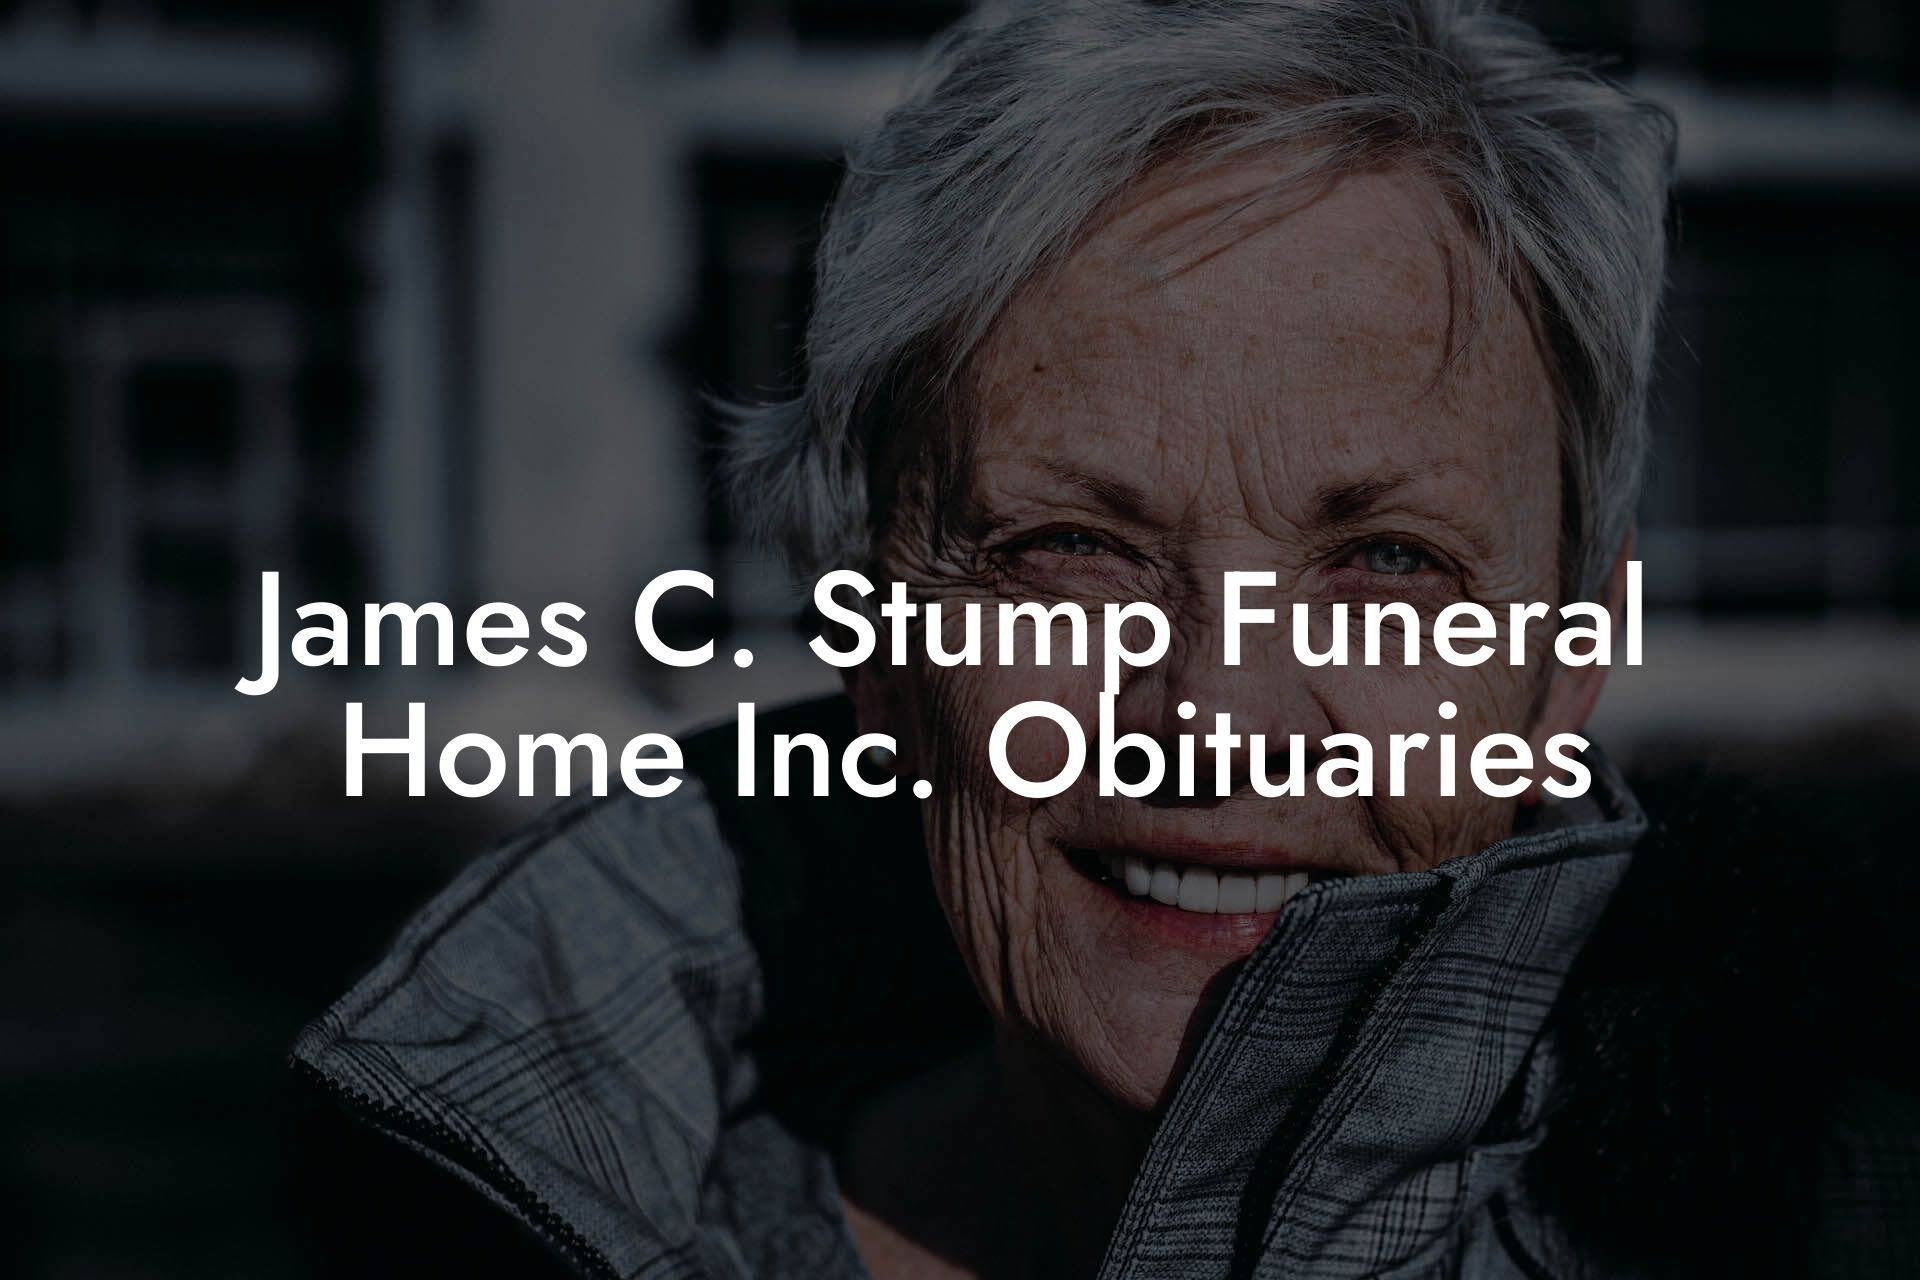 James C. Stump Funeral Home Inc. Obituaries